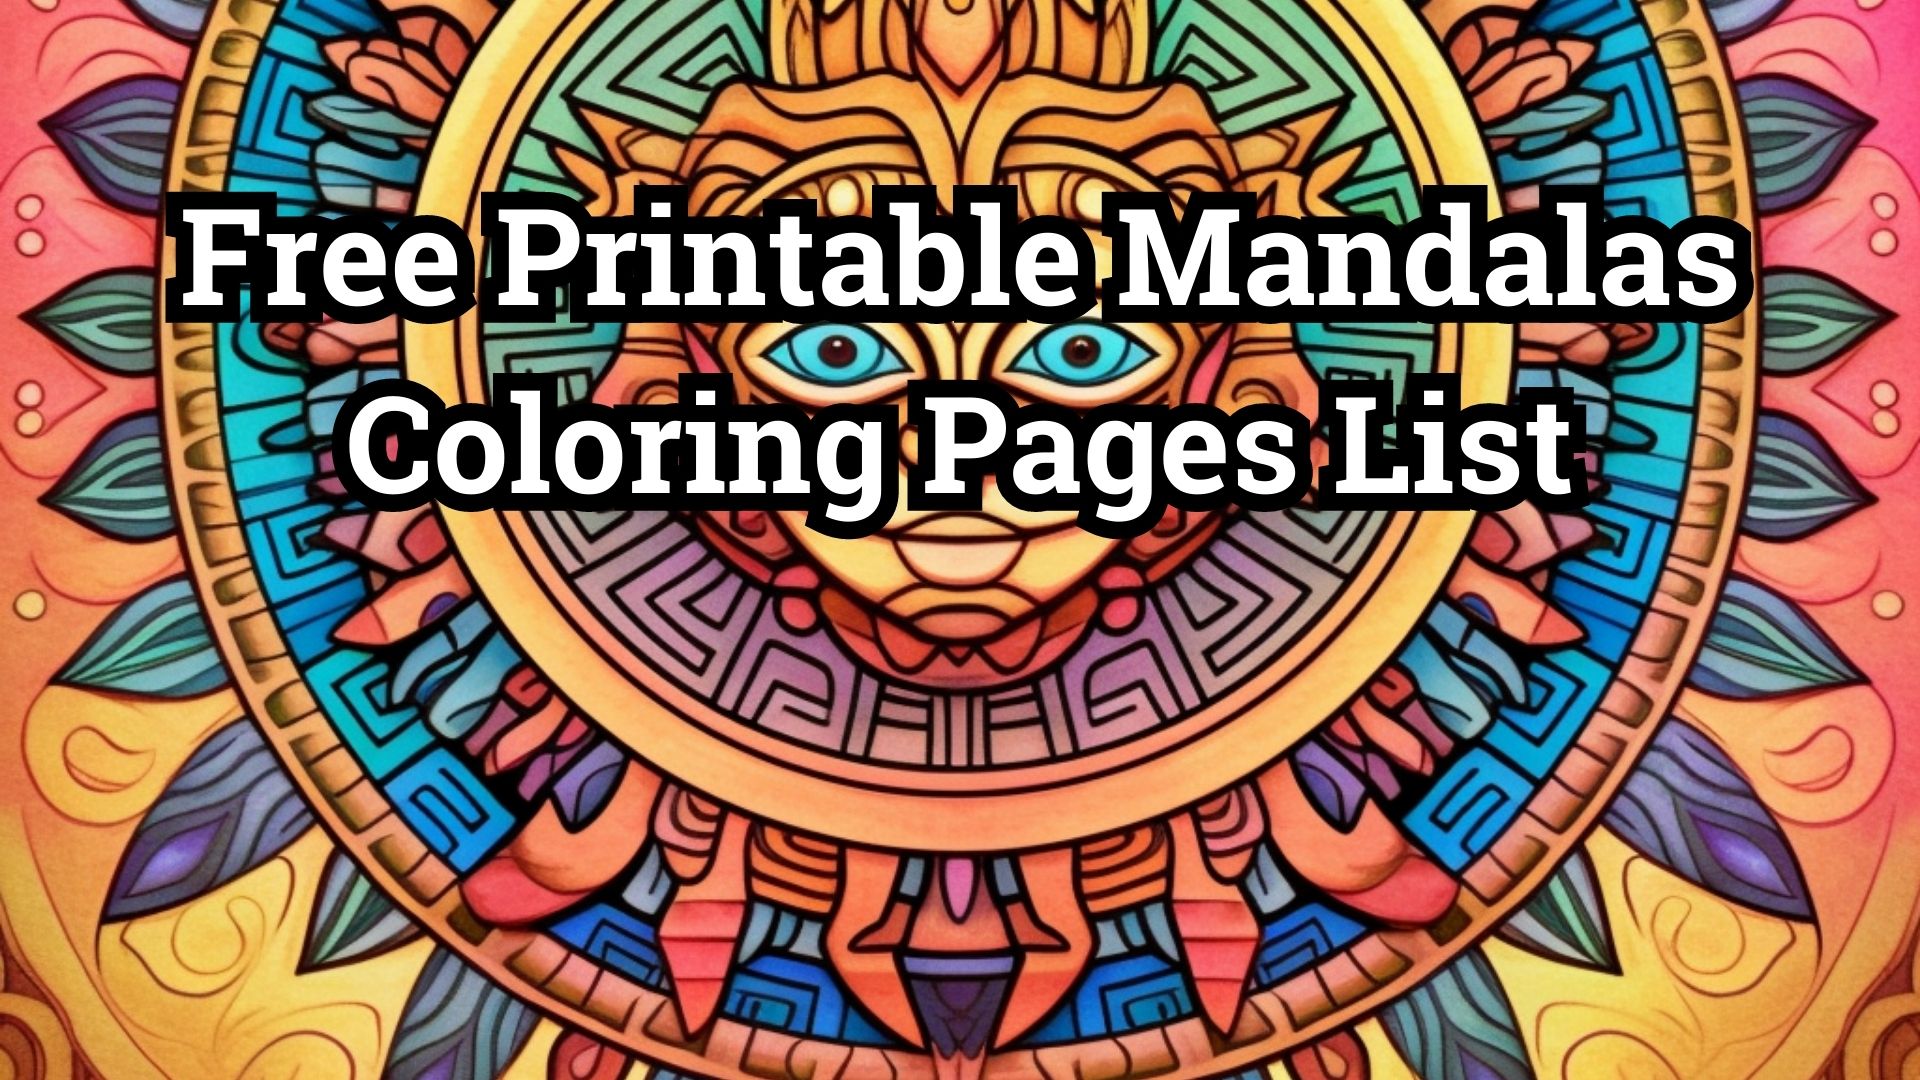 Free Printable Mandalas Coloring Pages List